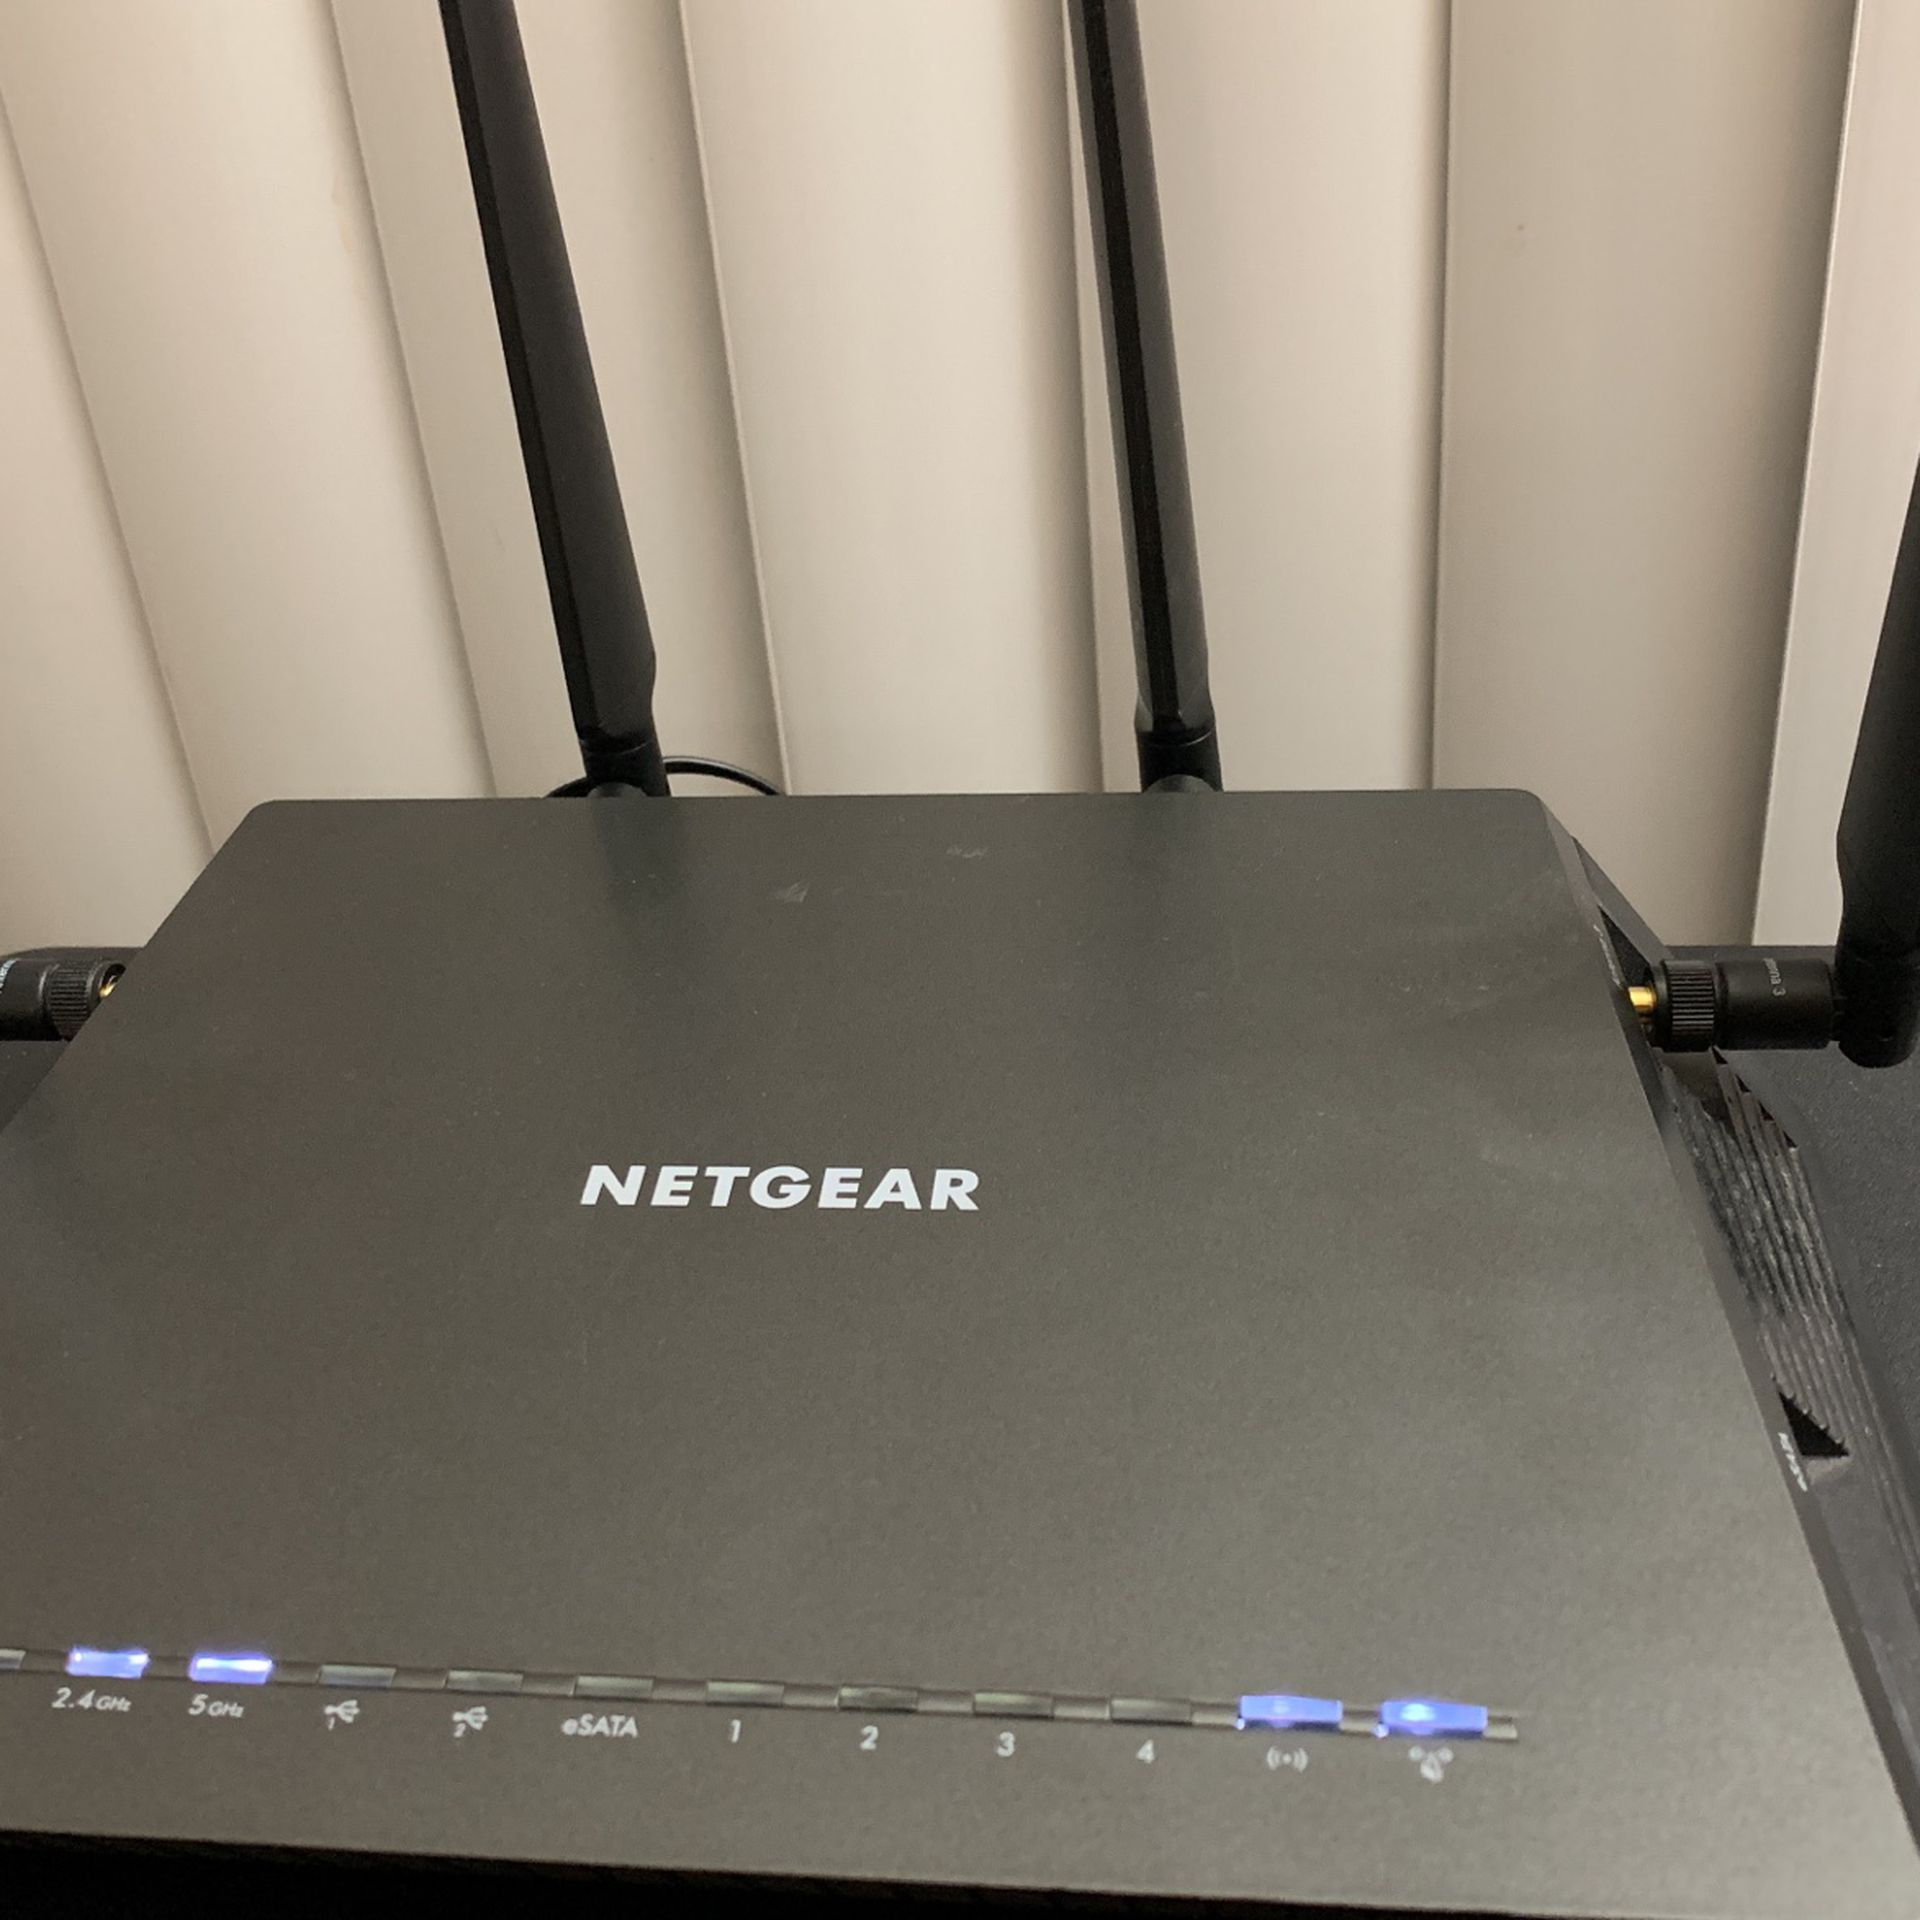 Netgear Nighthawk X4S AC2600 Smart WiFi Router Dual Band